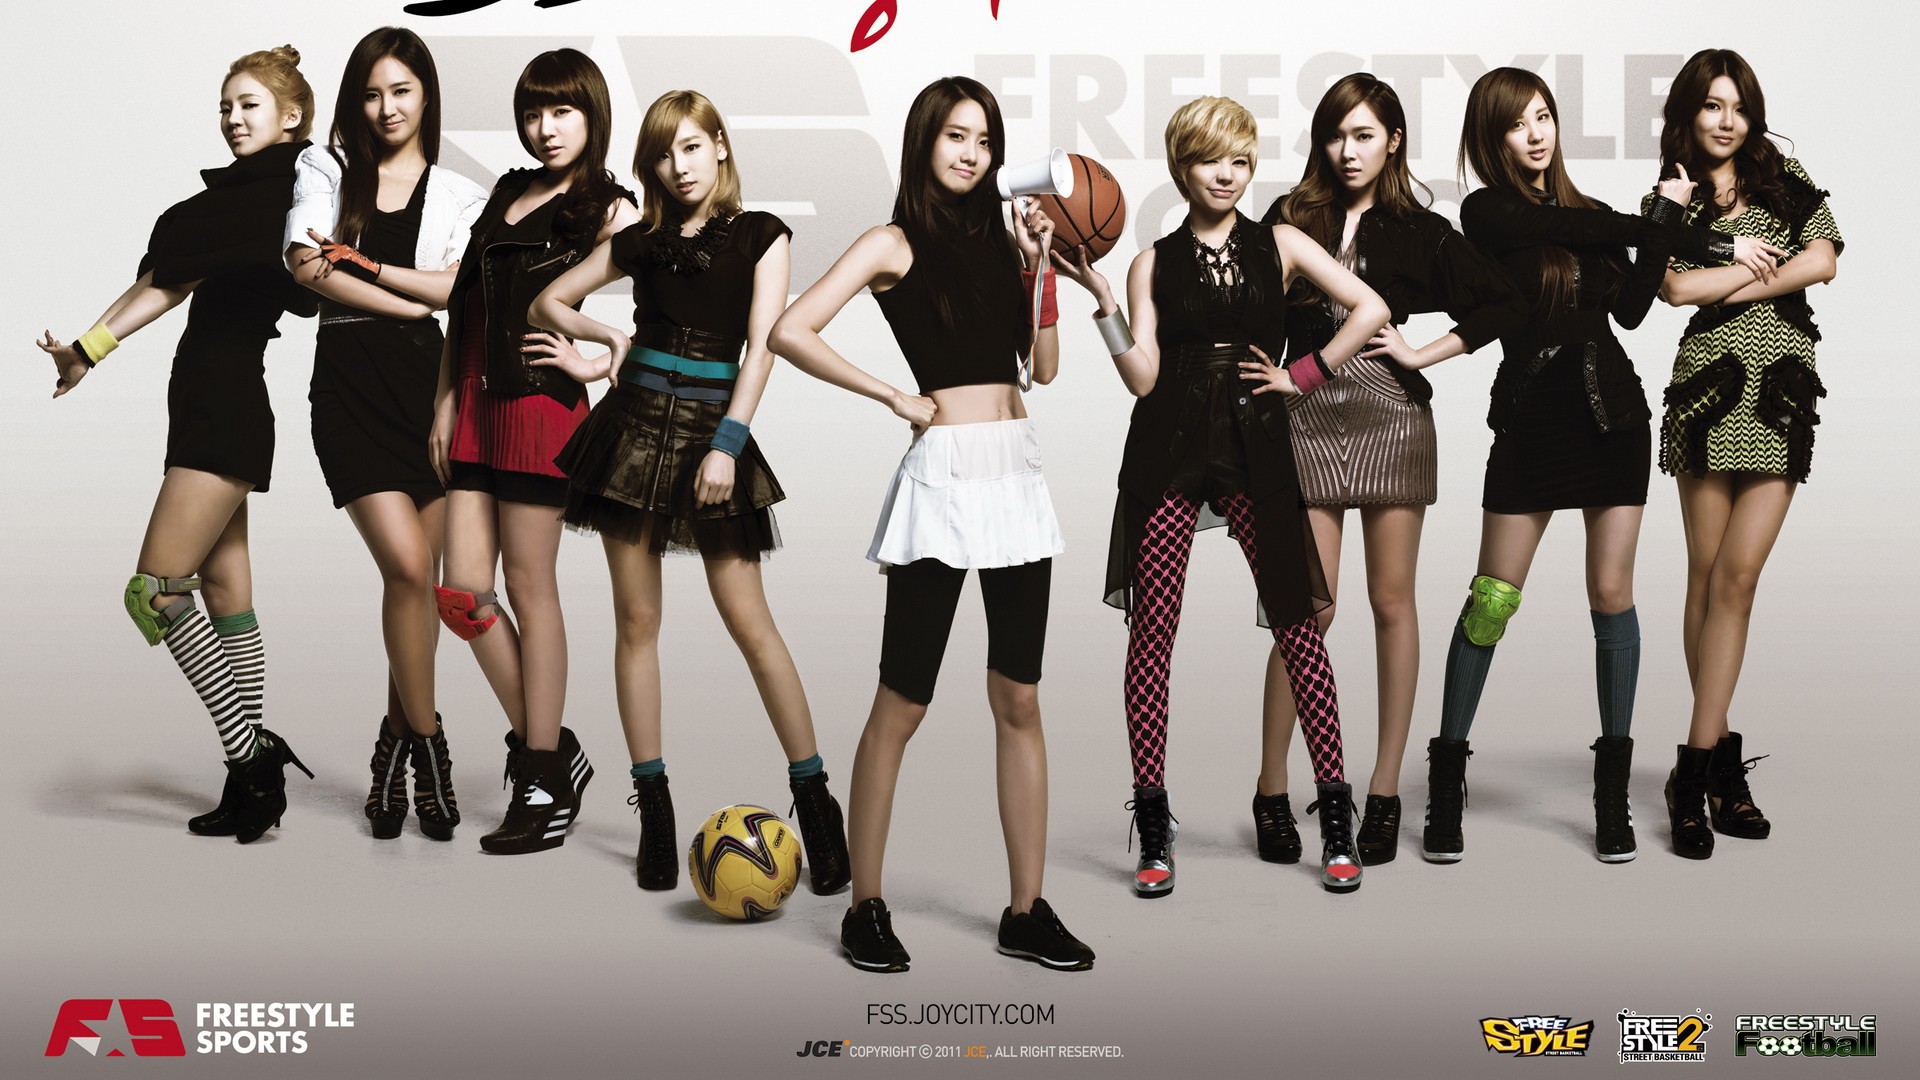 Korean Girls In Sportswear Wallpaper And Image